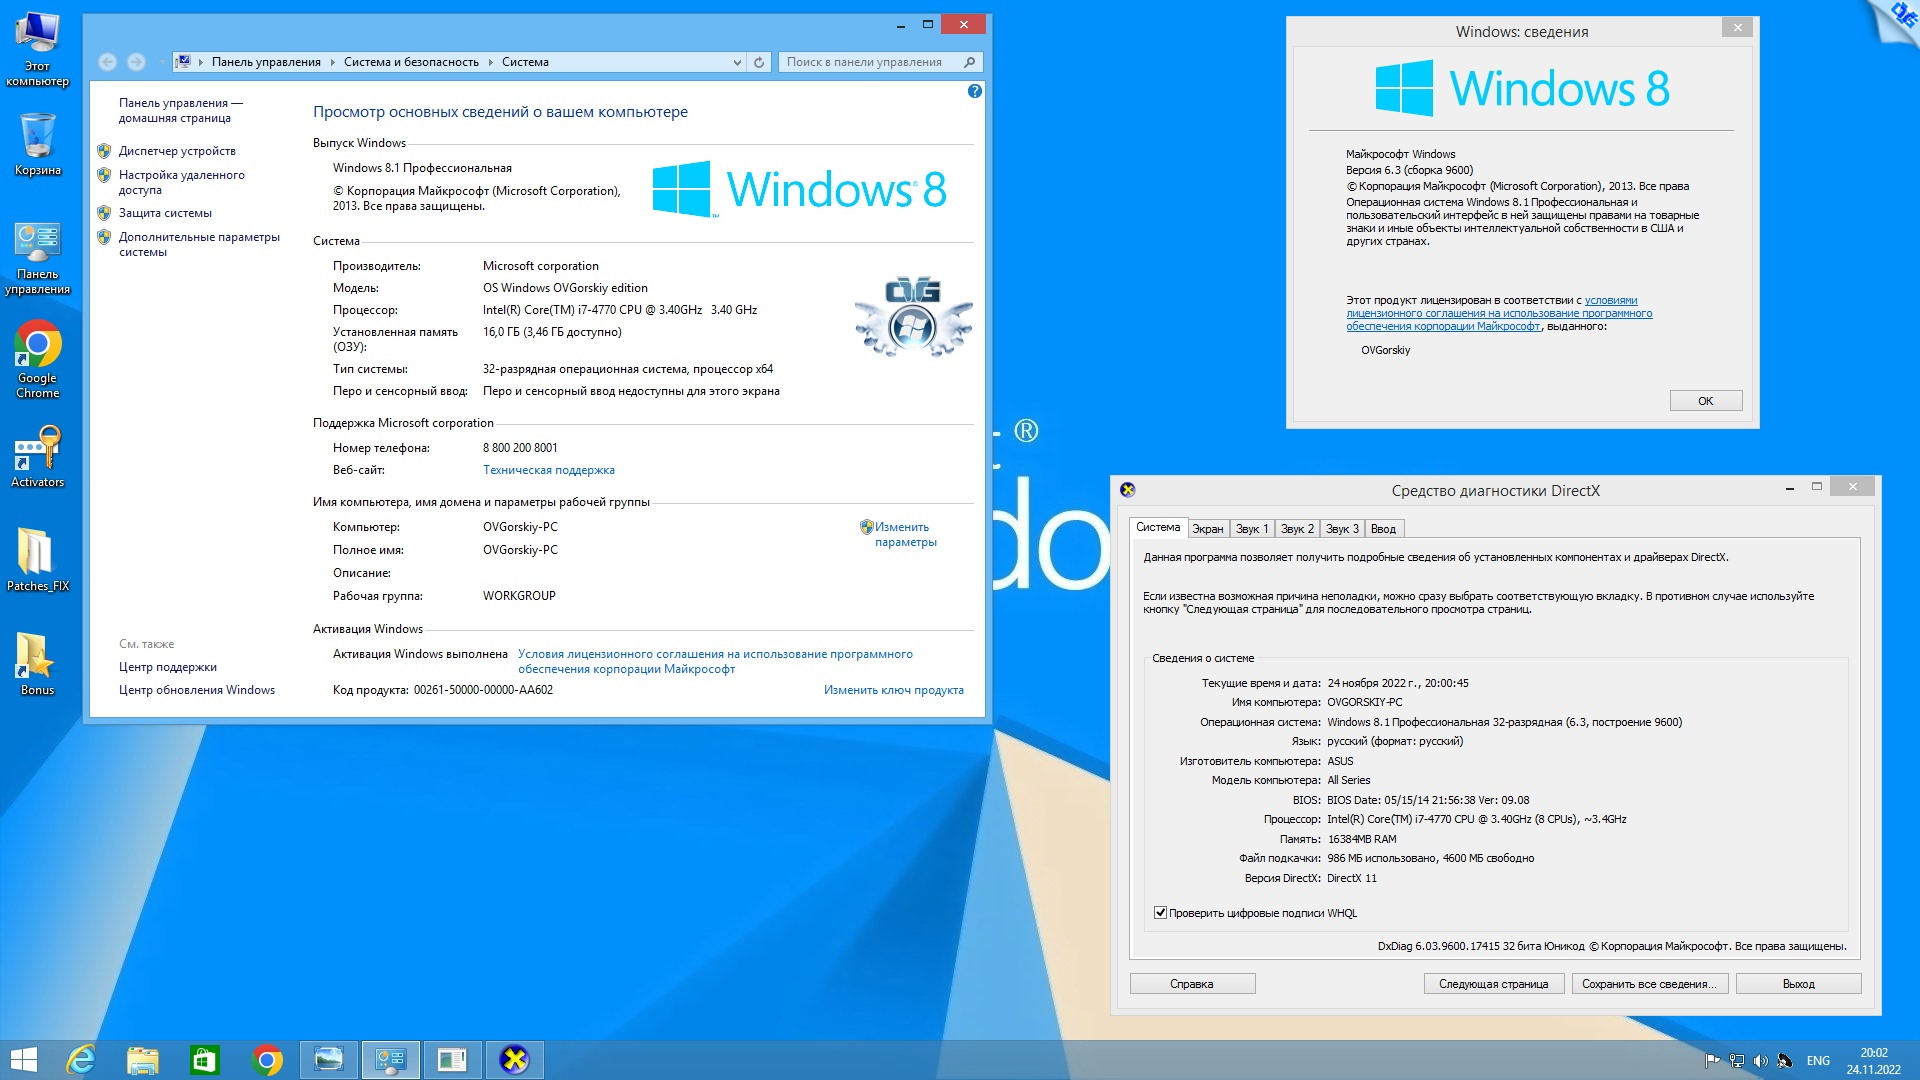  скачать Windows 8.1 Professional VL Update 3 Rus OVGorskiy бесплатно